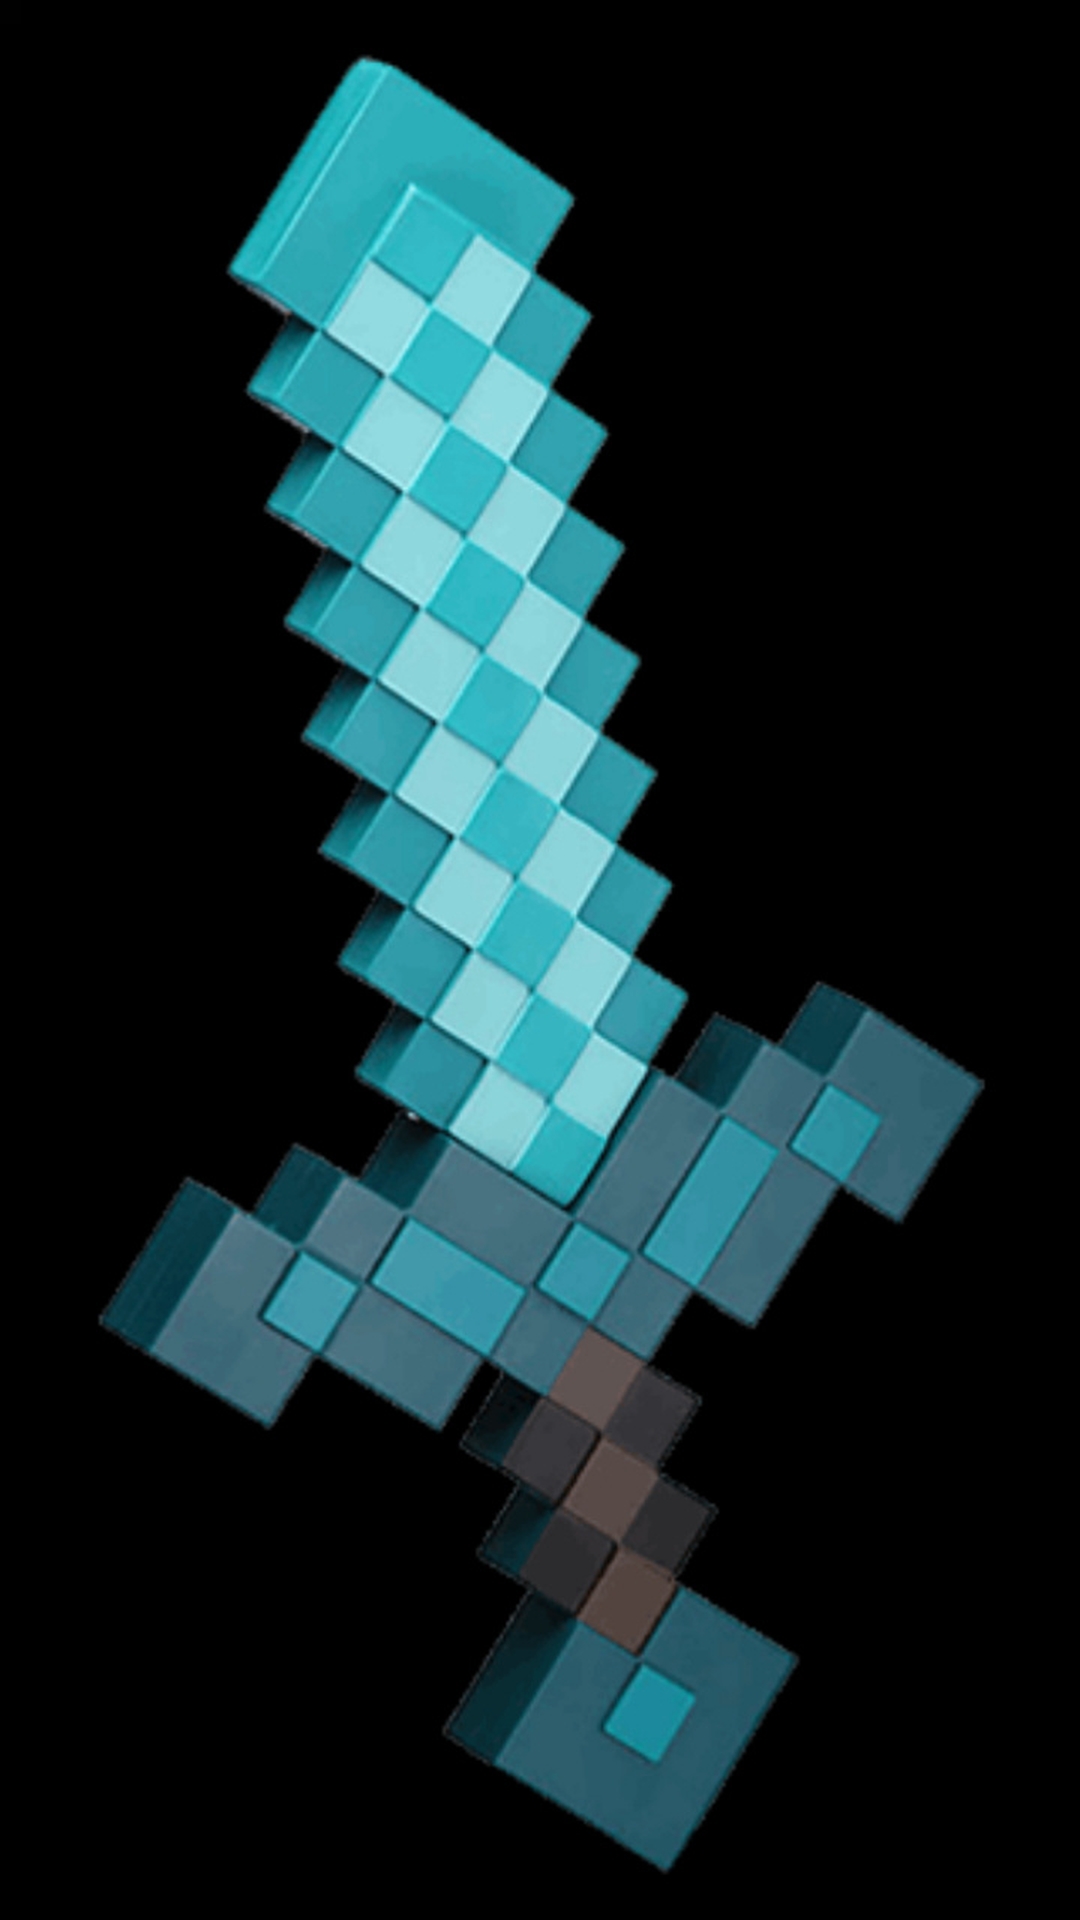 Майнкрафт на телефоне алмазы. Меч майнкрафт. Алмазный майнкрафт. Алмаз майнкрафт. Minecraft Diamond Sword.